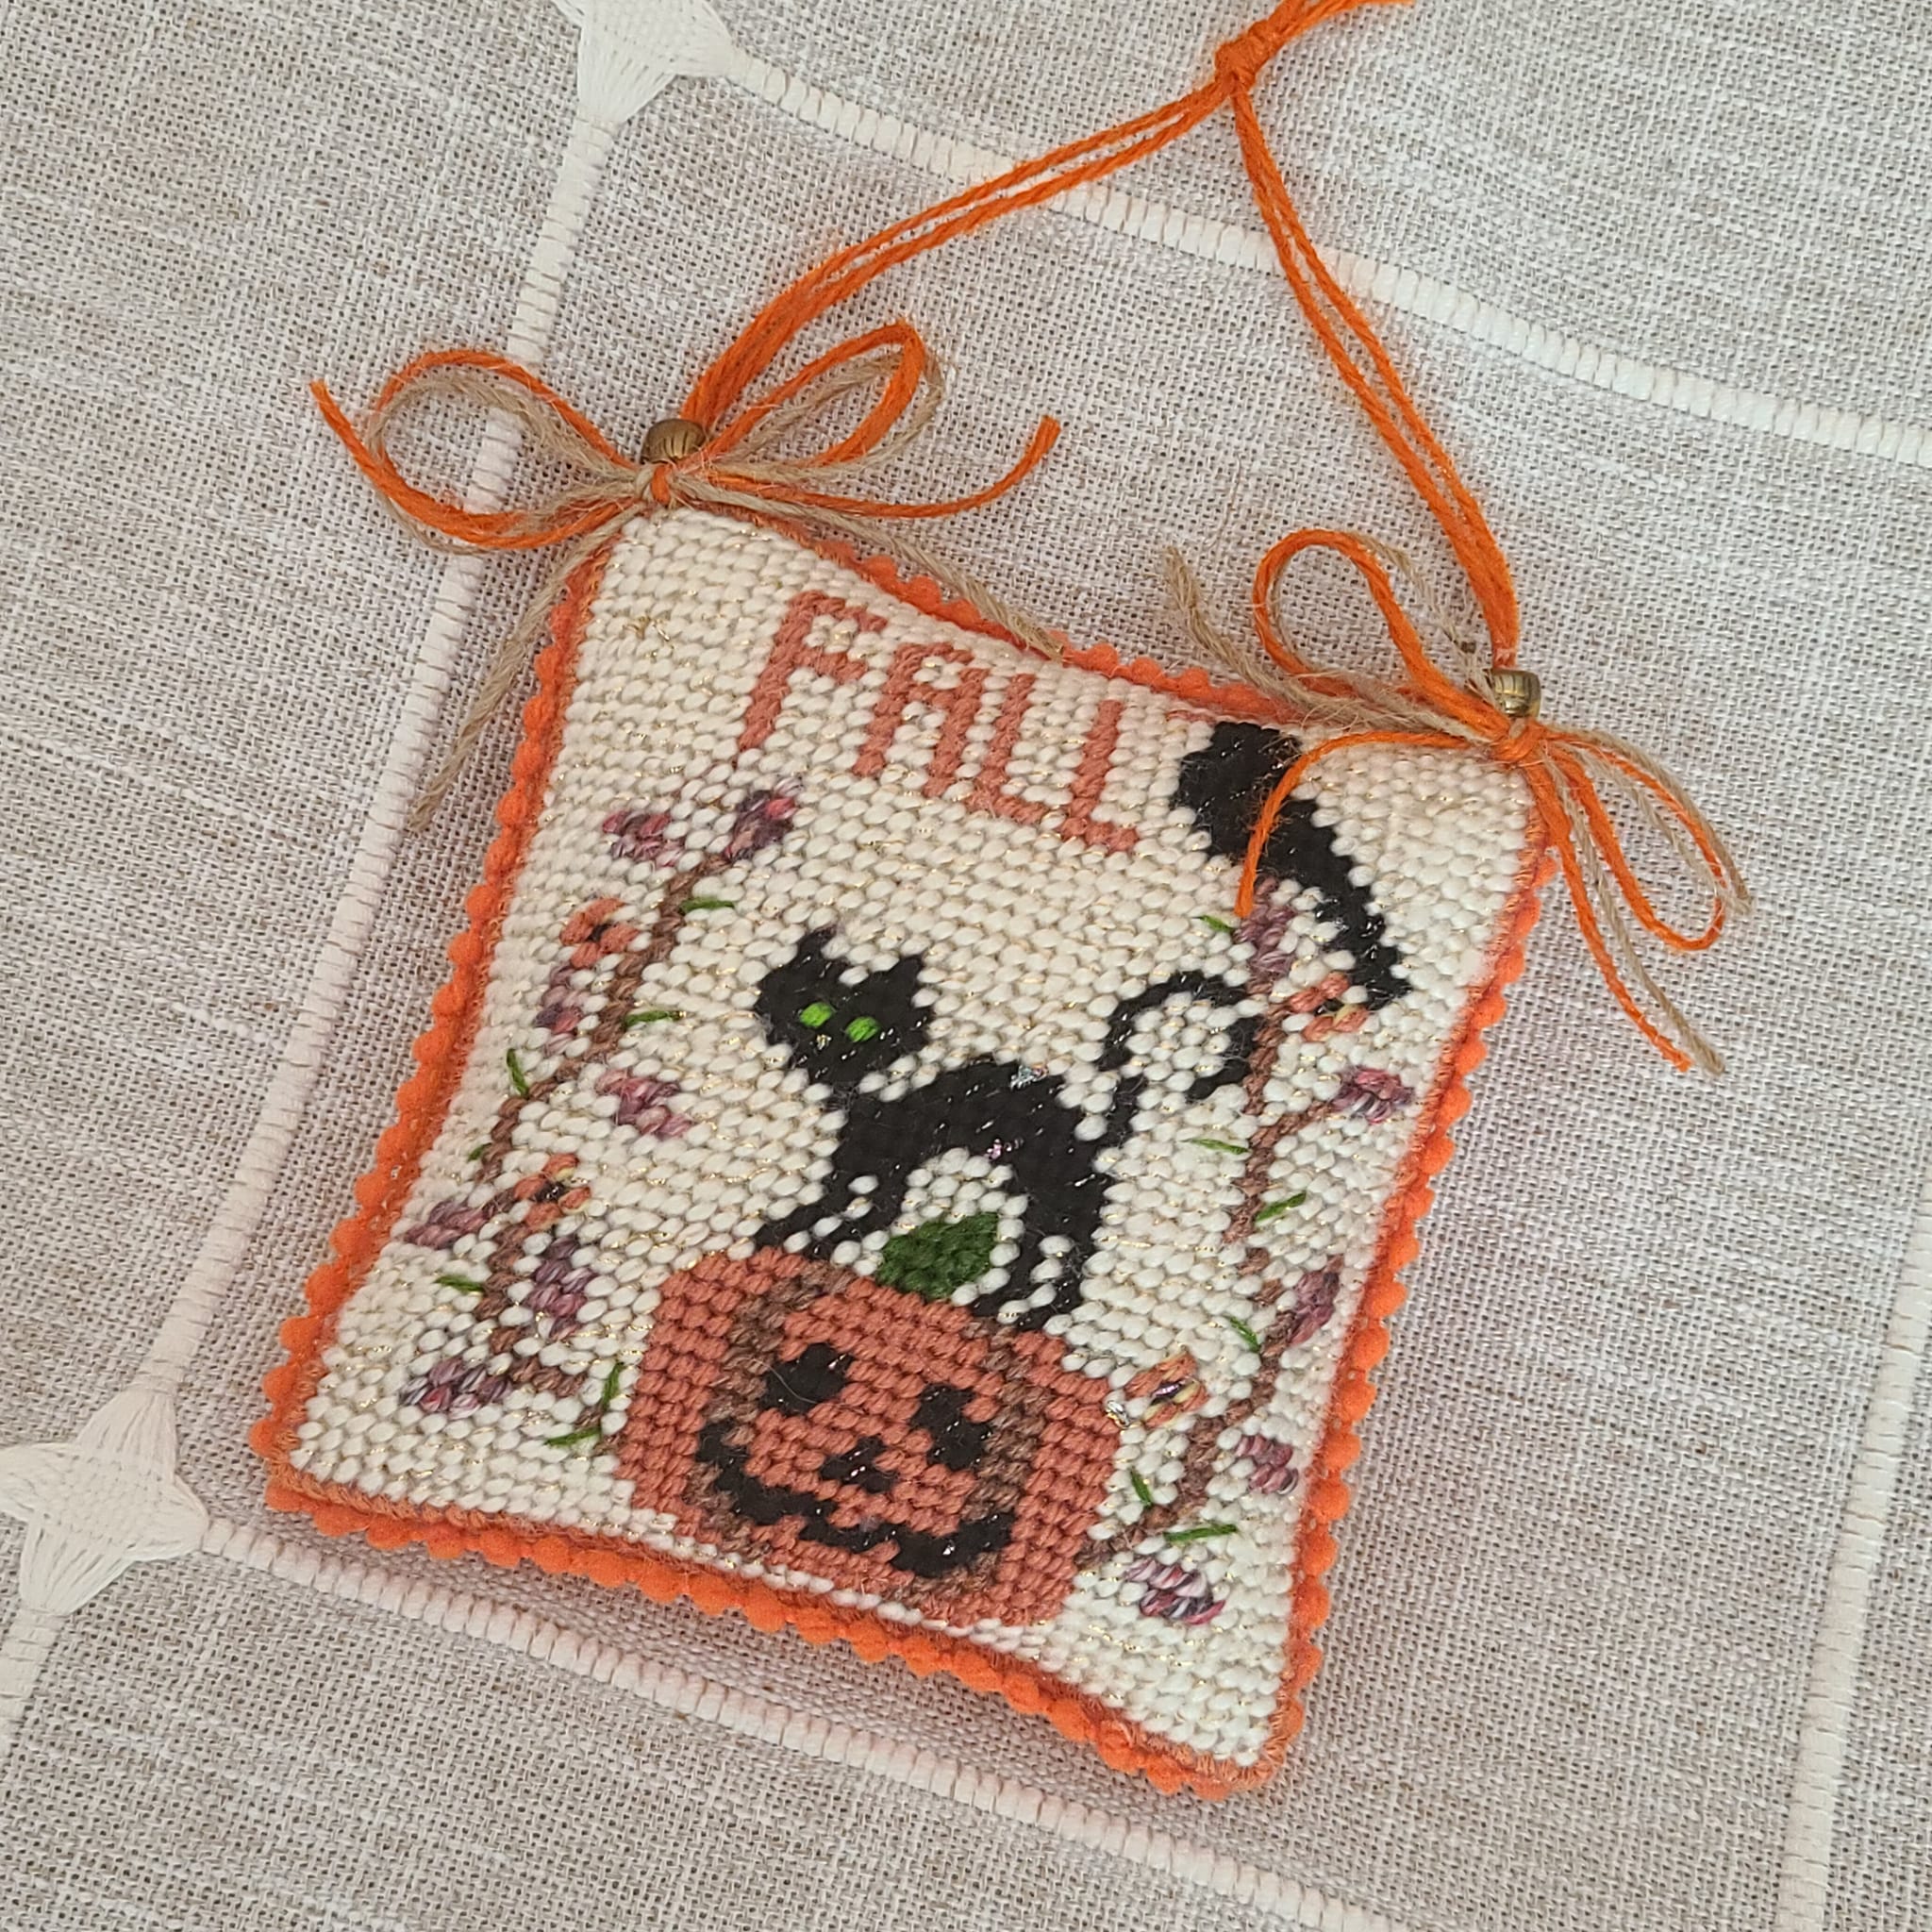 Hallowen finished needlepoint FALL pumpkin & black cat ornament